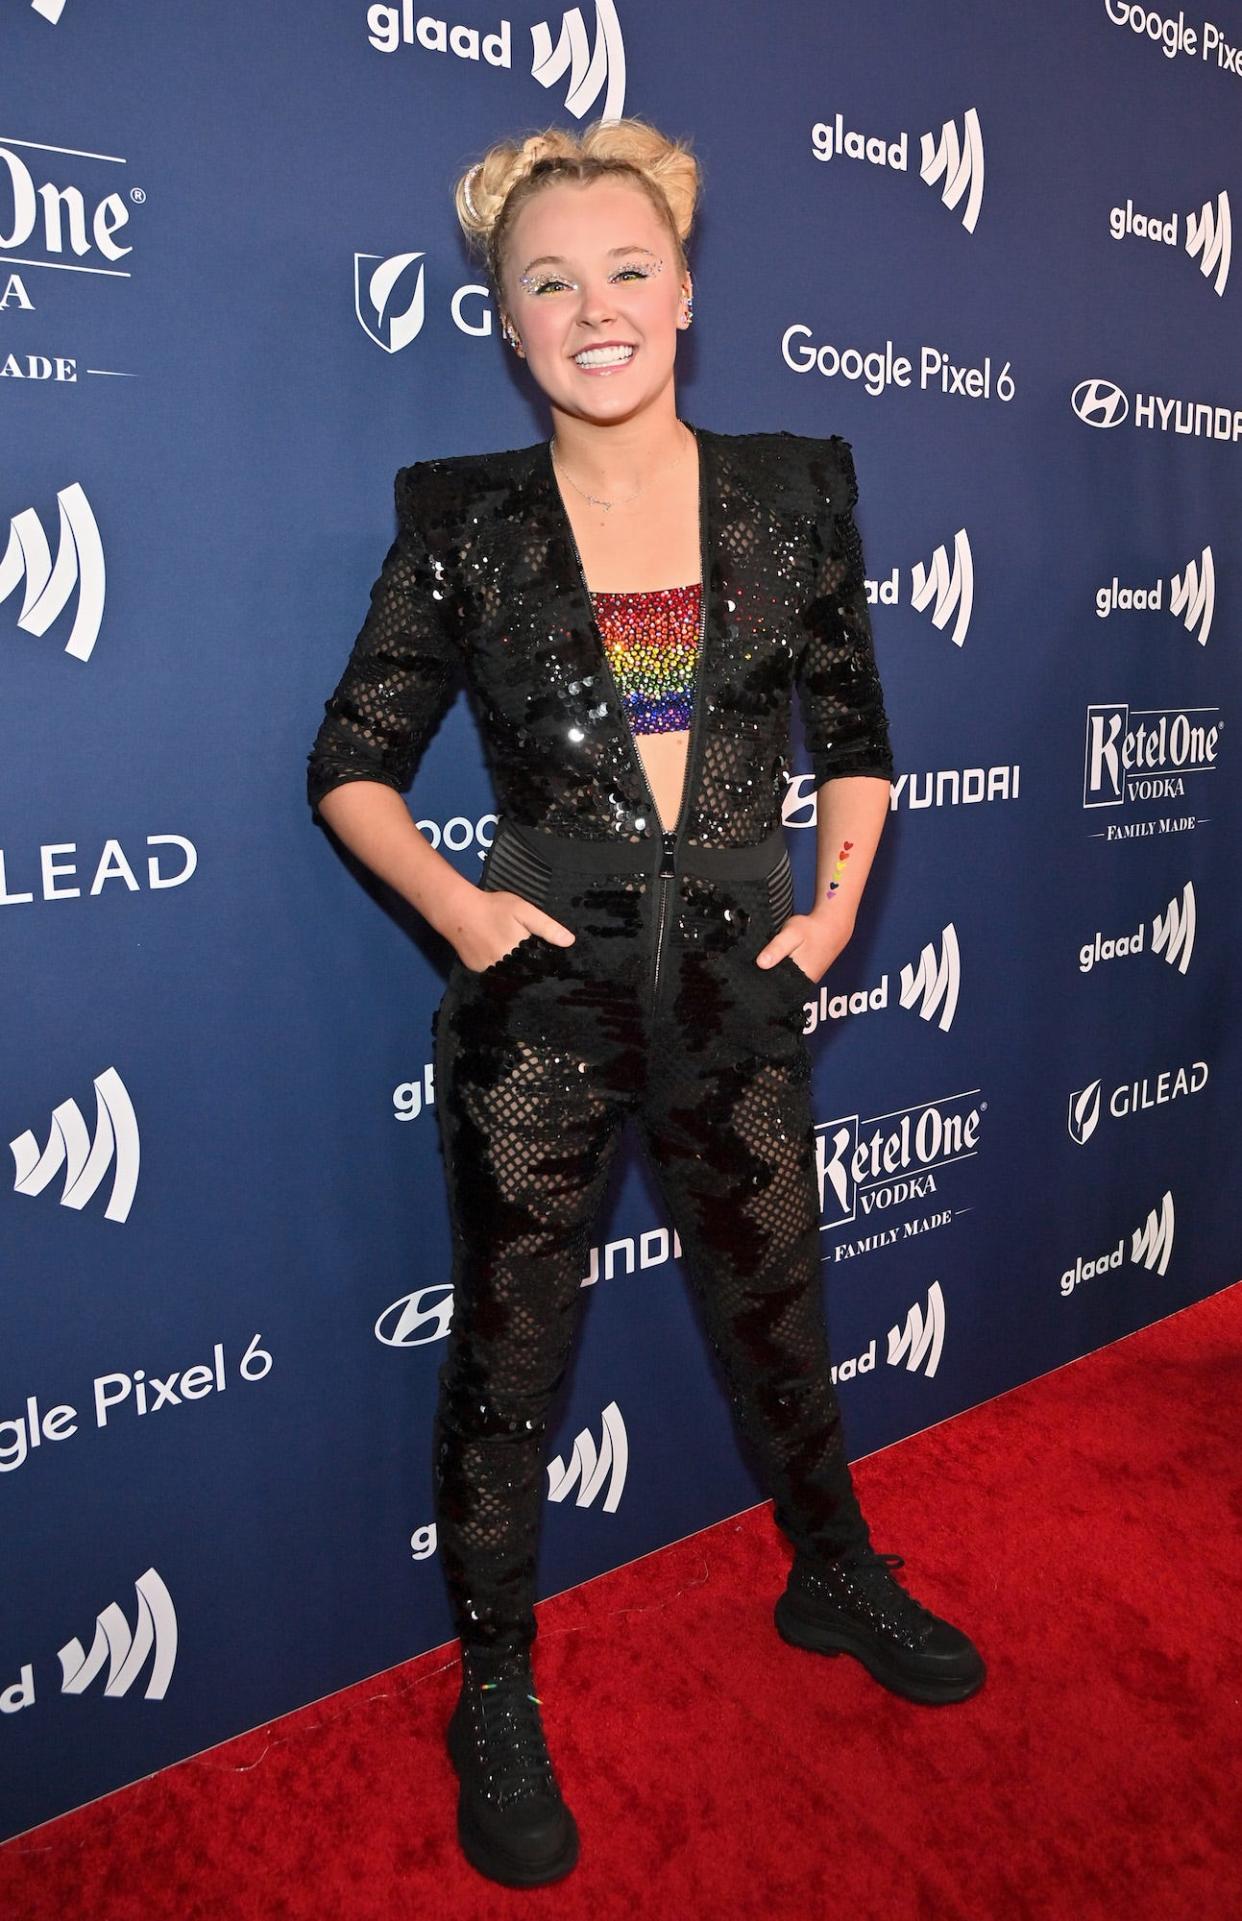 JoJo Siwa at the GLAAD Media Awards in Beverly Hills on April 2, 2022.